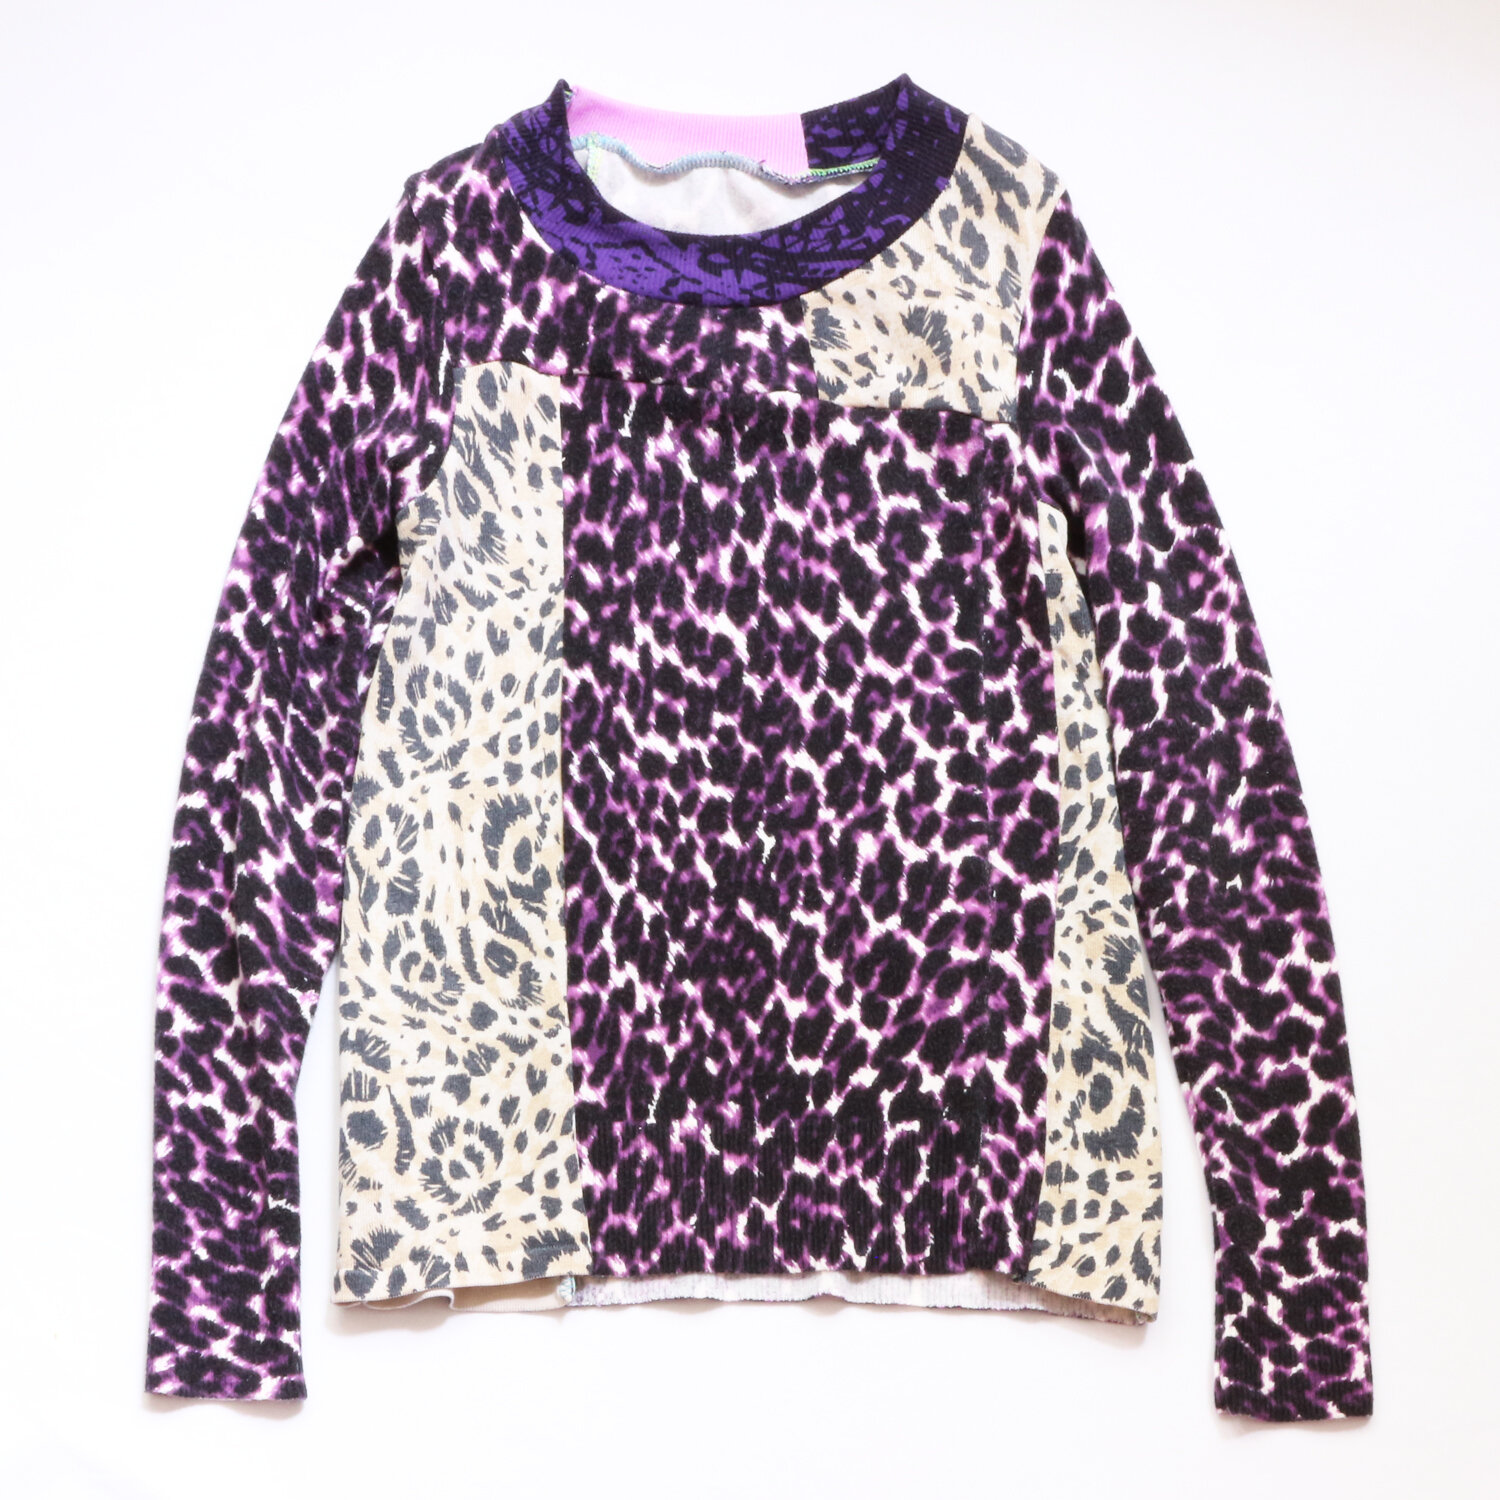 8:10 animal:print:purple:ls:sweater.jpg